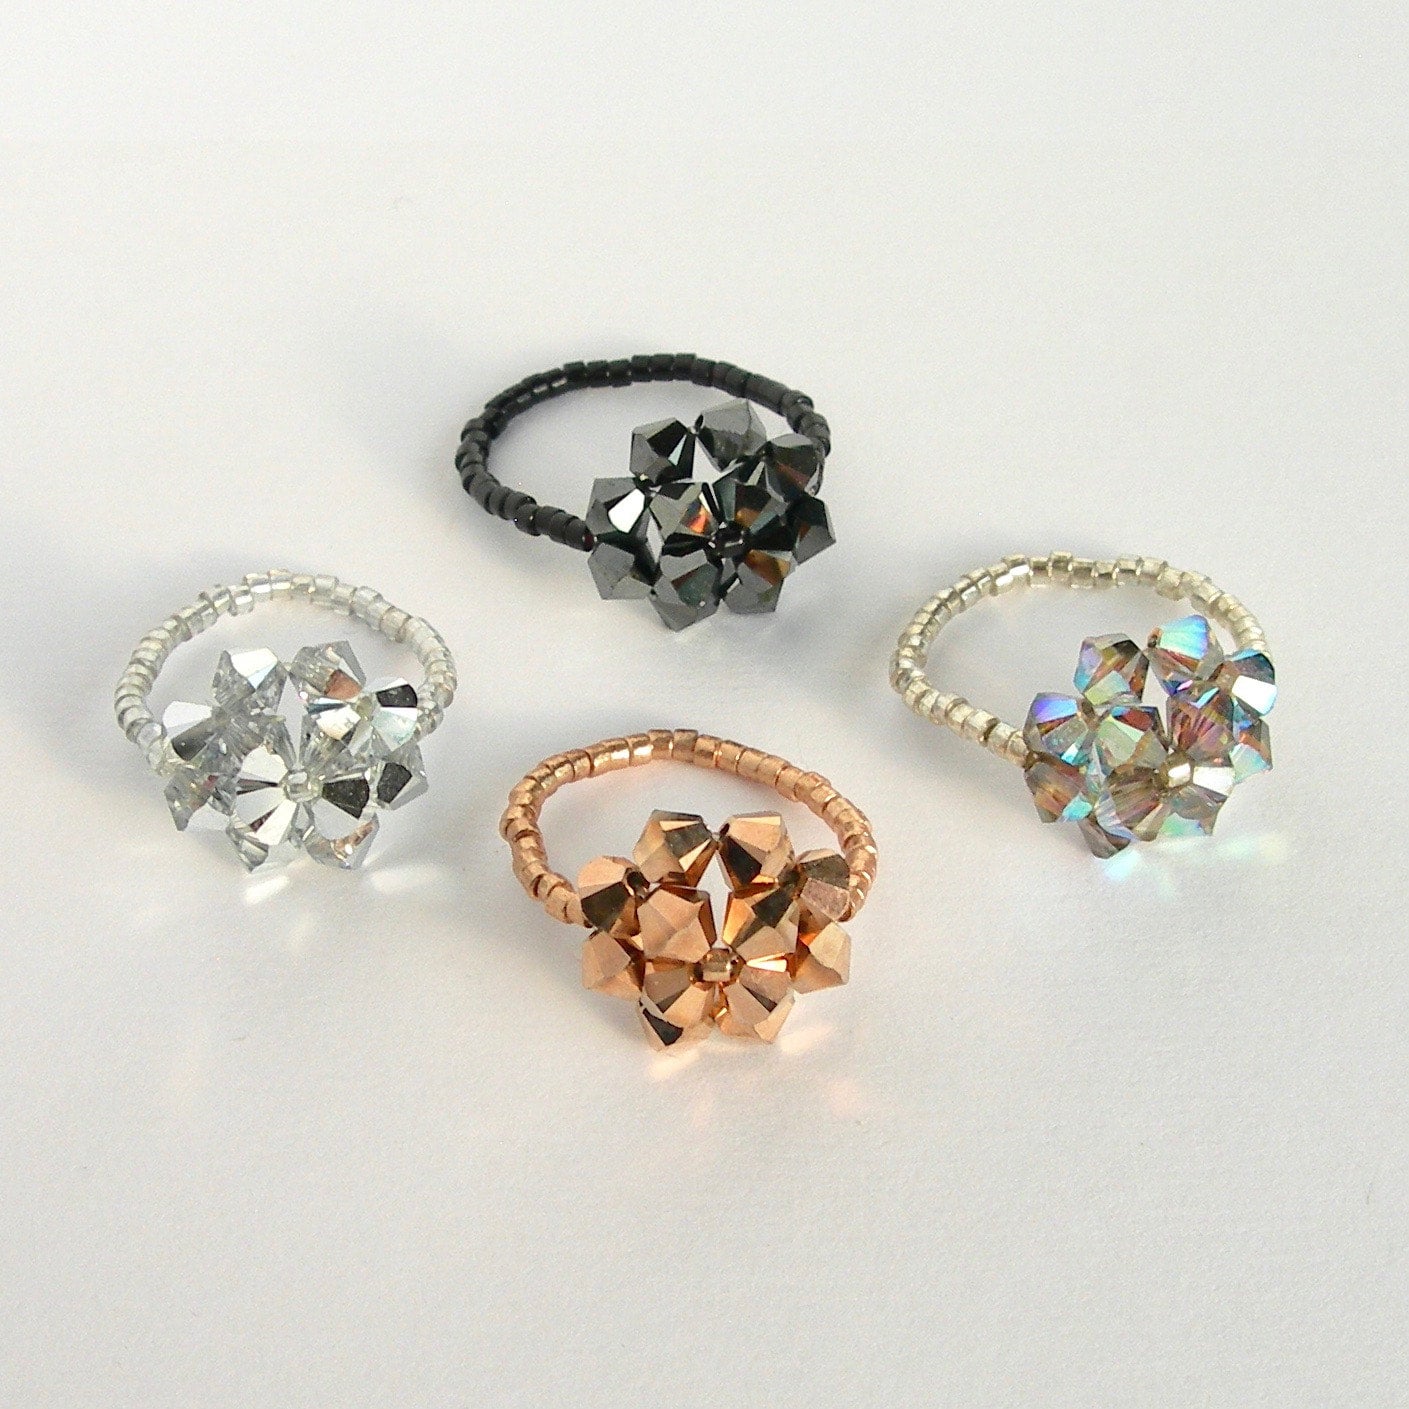 Purchase the High-Quality Swarovski Crystal Rings | GLAMIRA.com